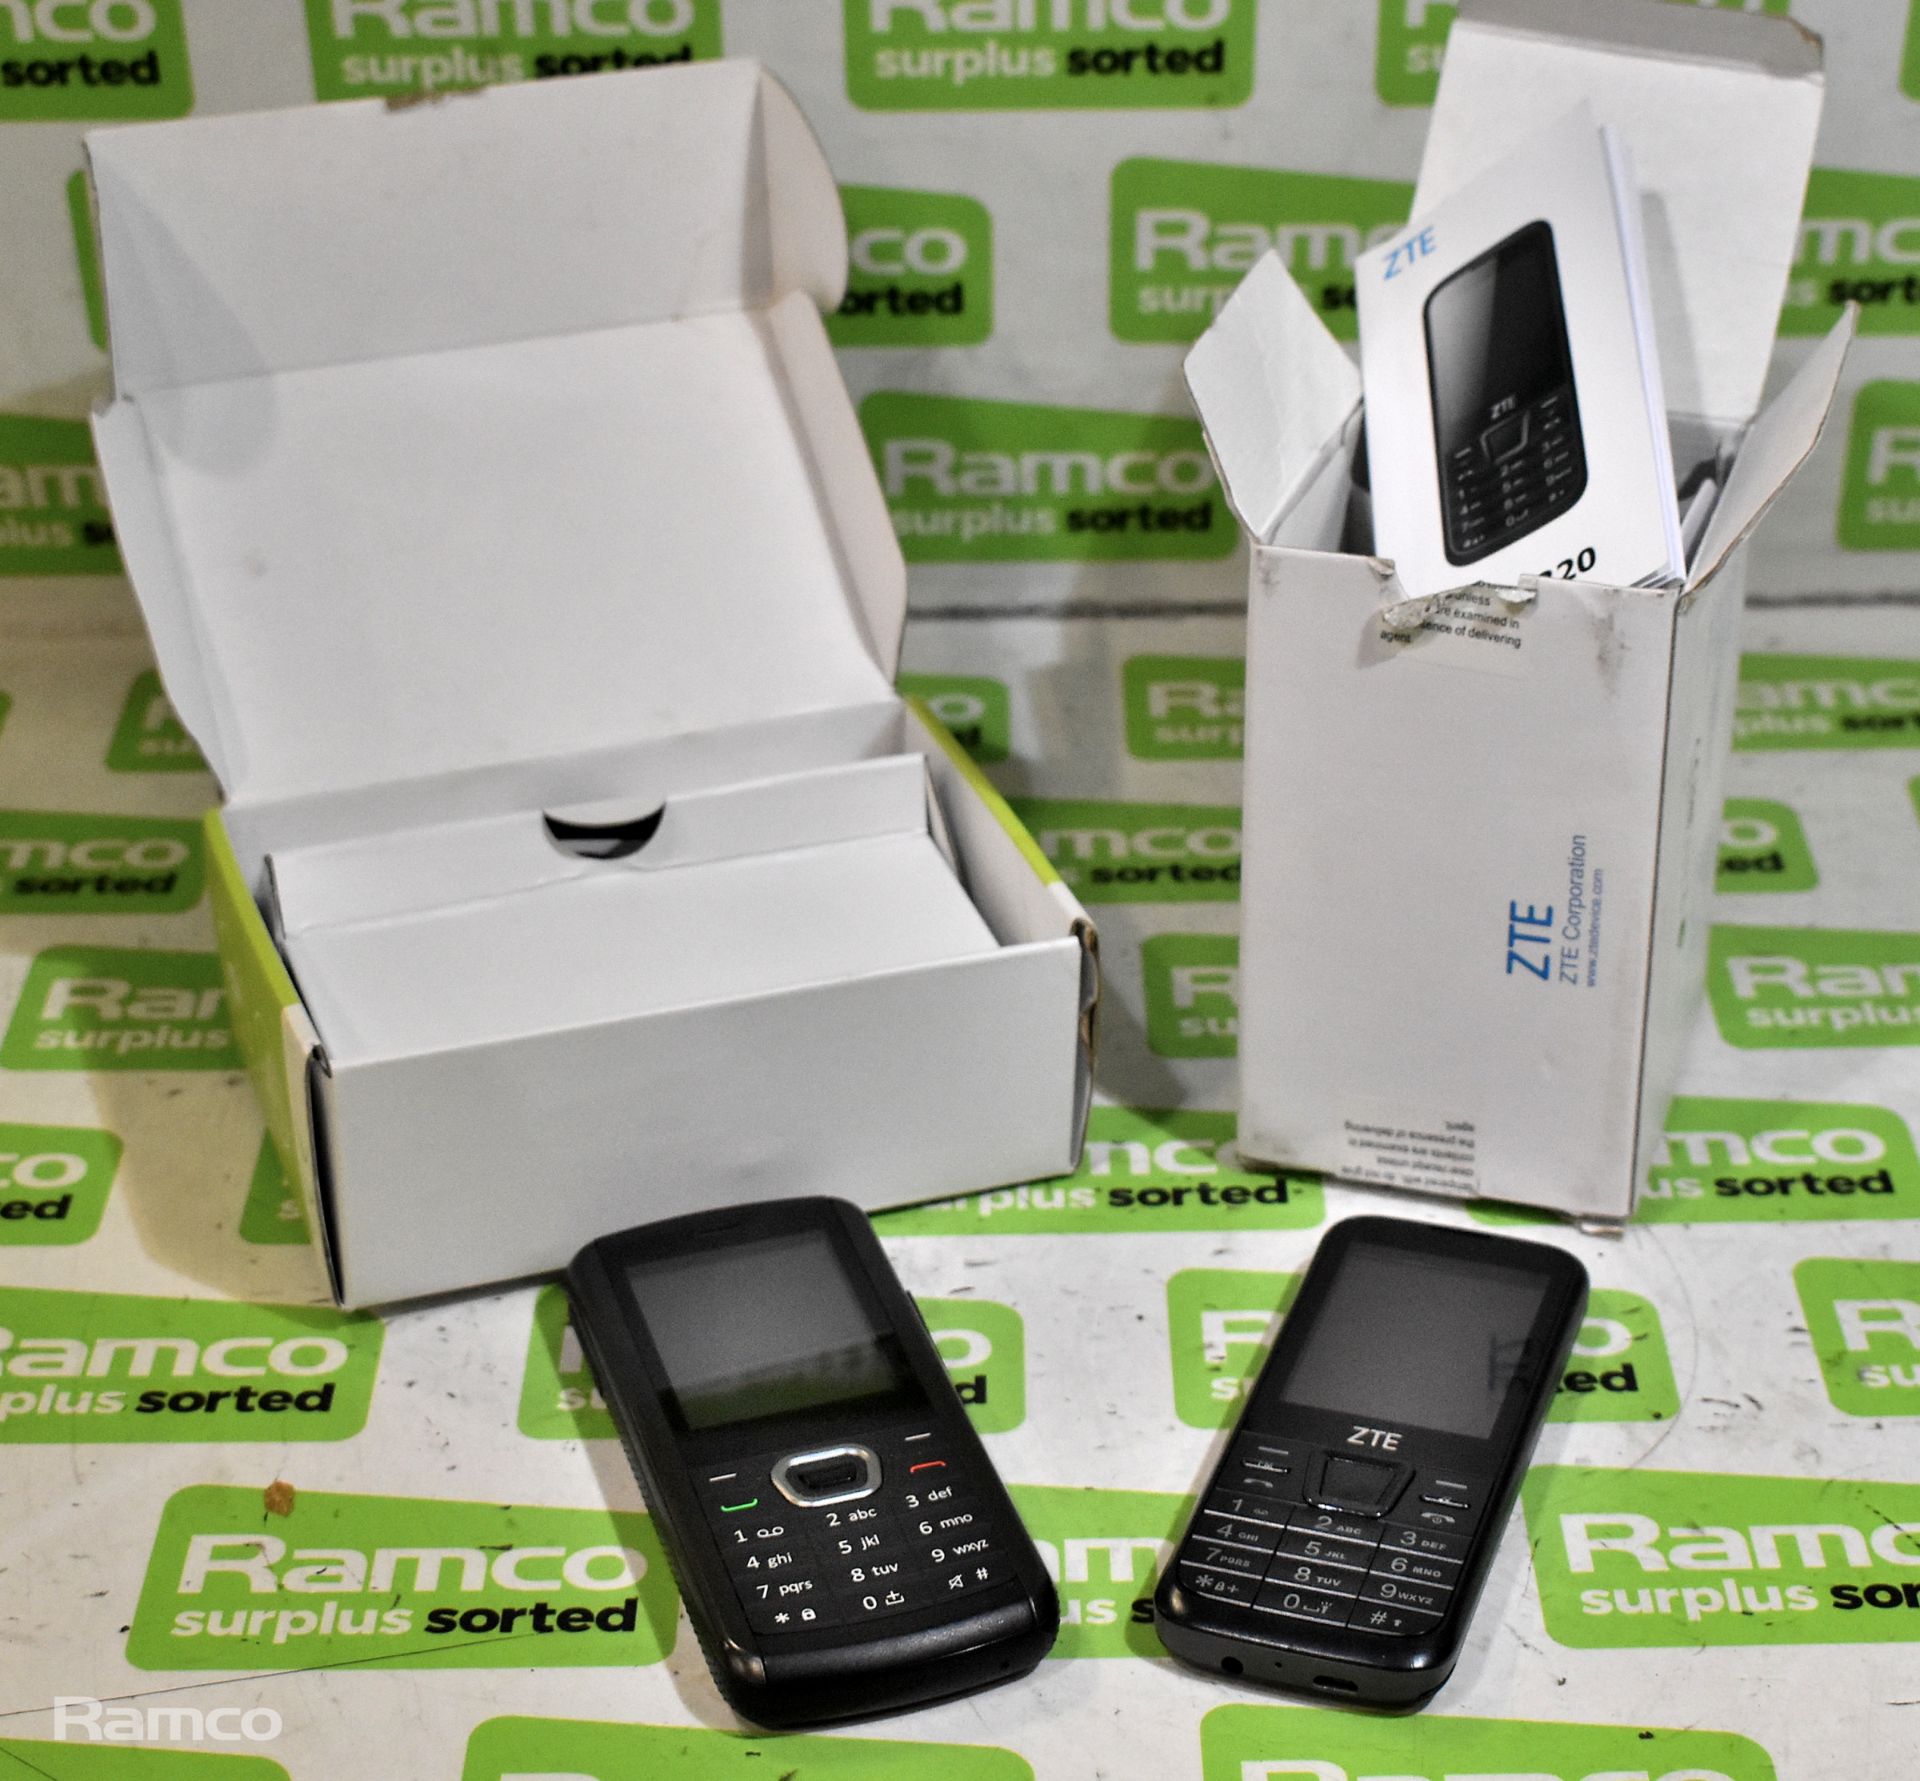 ZTE F320 mobile phone in box, Mobiwire Dakota mobile phone in box